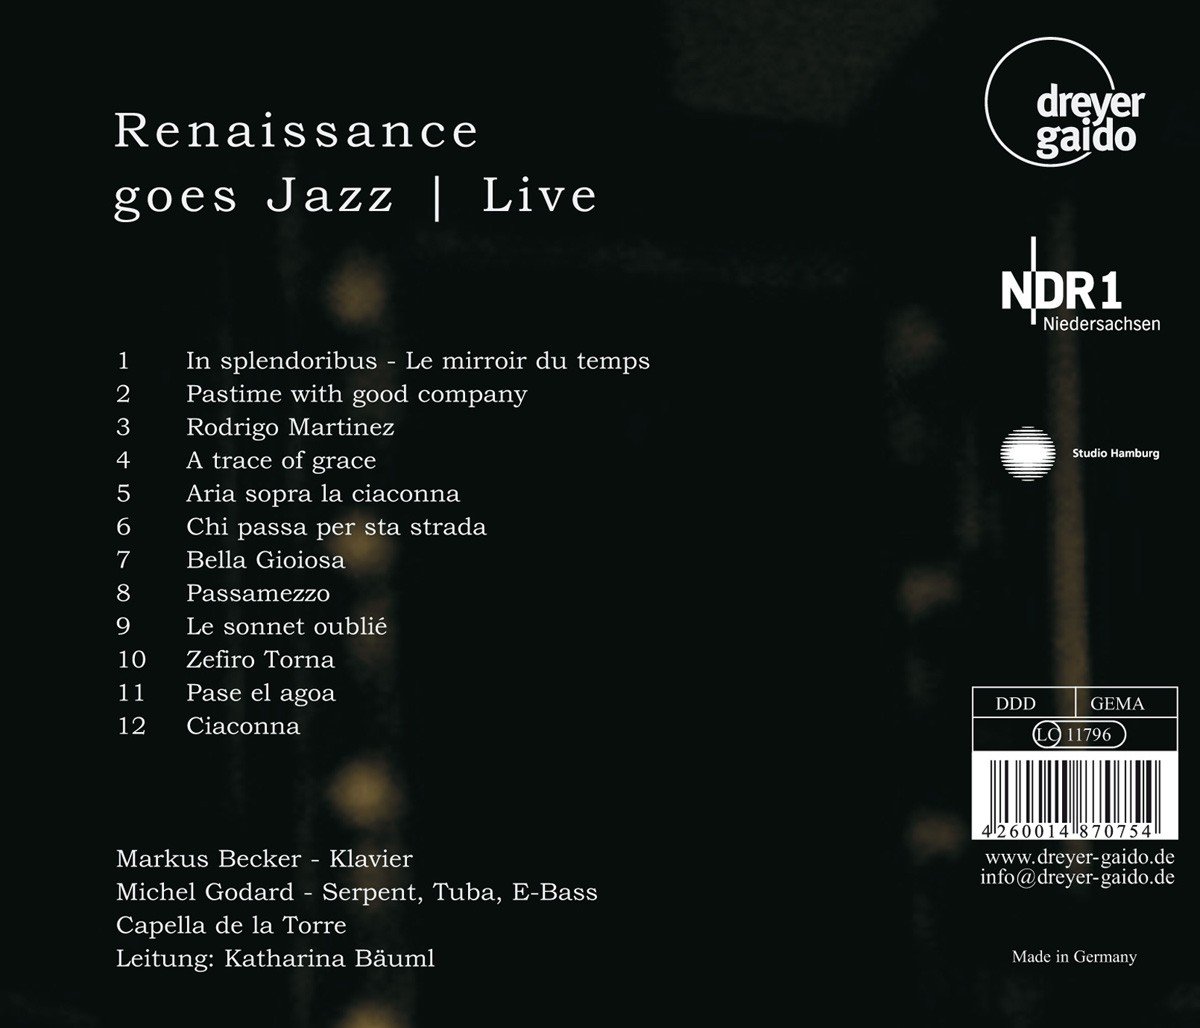 Capella de la Torre 재즈로 연주하는 르네상스 음악 [공연실황] (Renaissance Goes Jazz [Live])